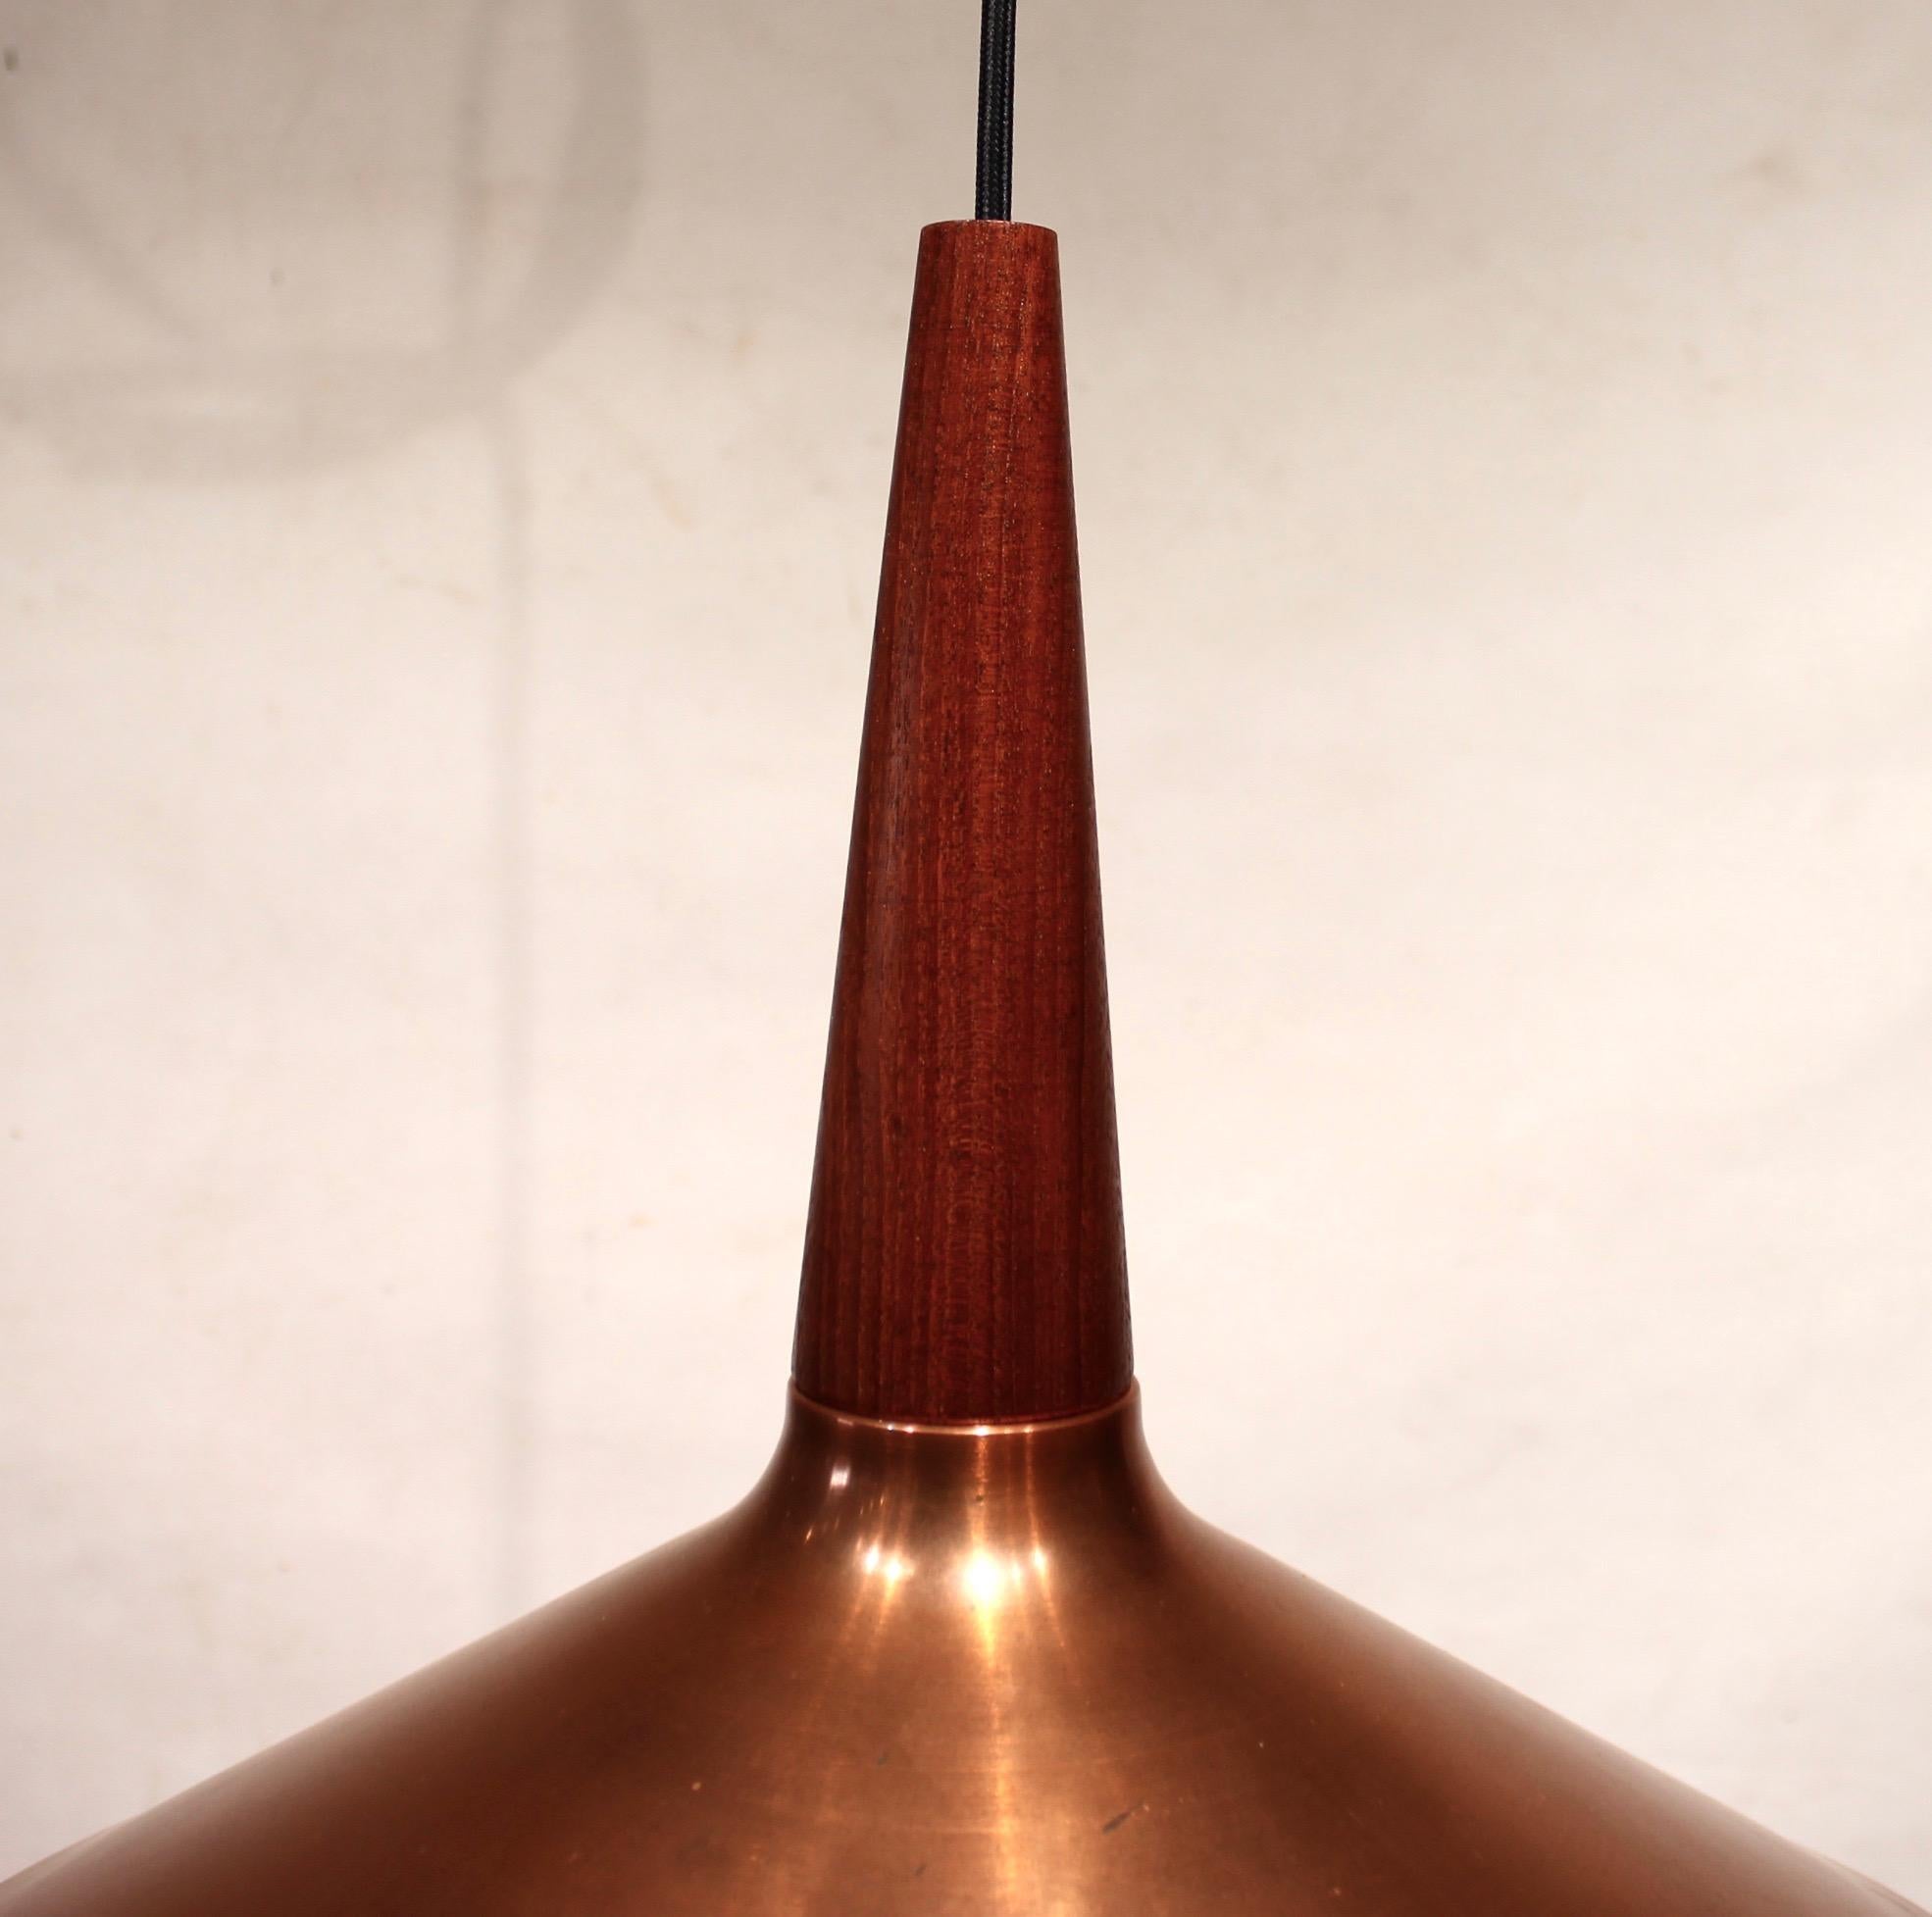 Scandinavian Modern Ceiling Pendant in Copper and Teak of Danish Design from the 1960s